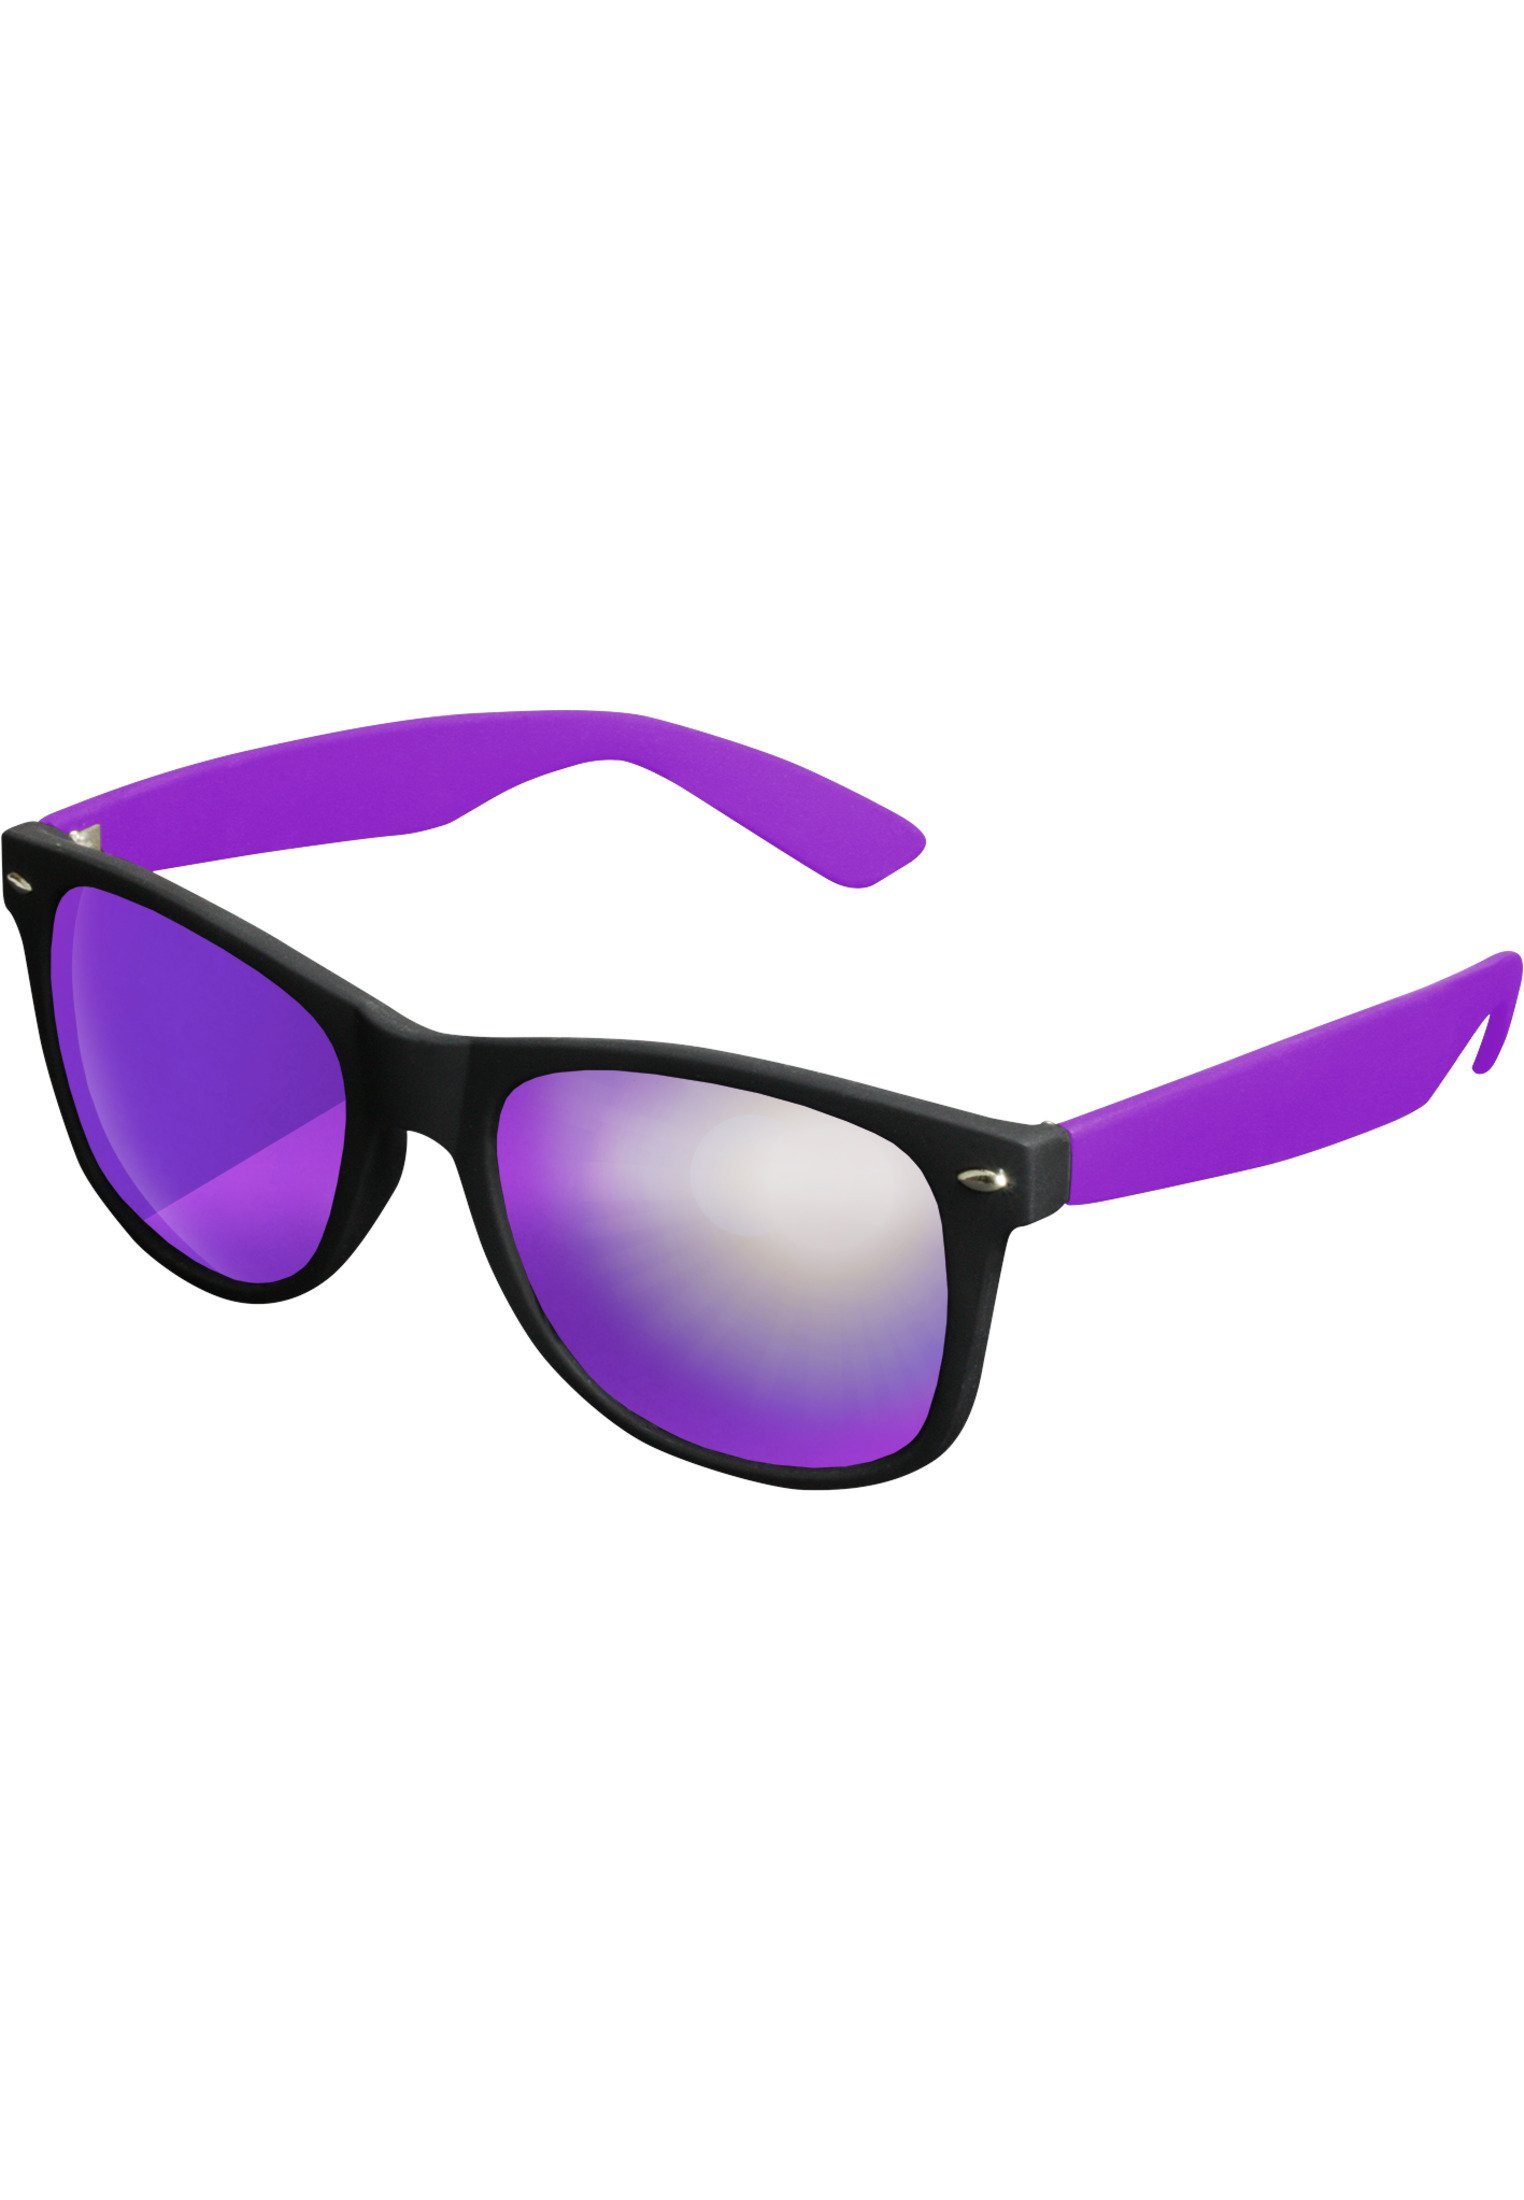 Sunglasses Mirror blk/pur/pur Likoma Accessoires MSTRDS Sonnenbrille